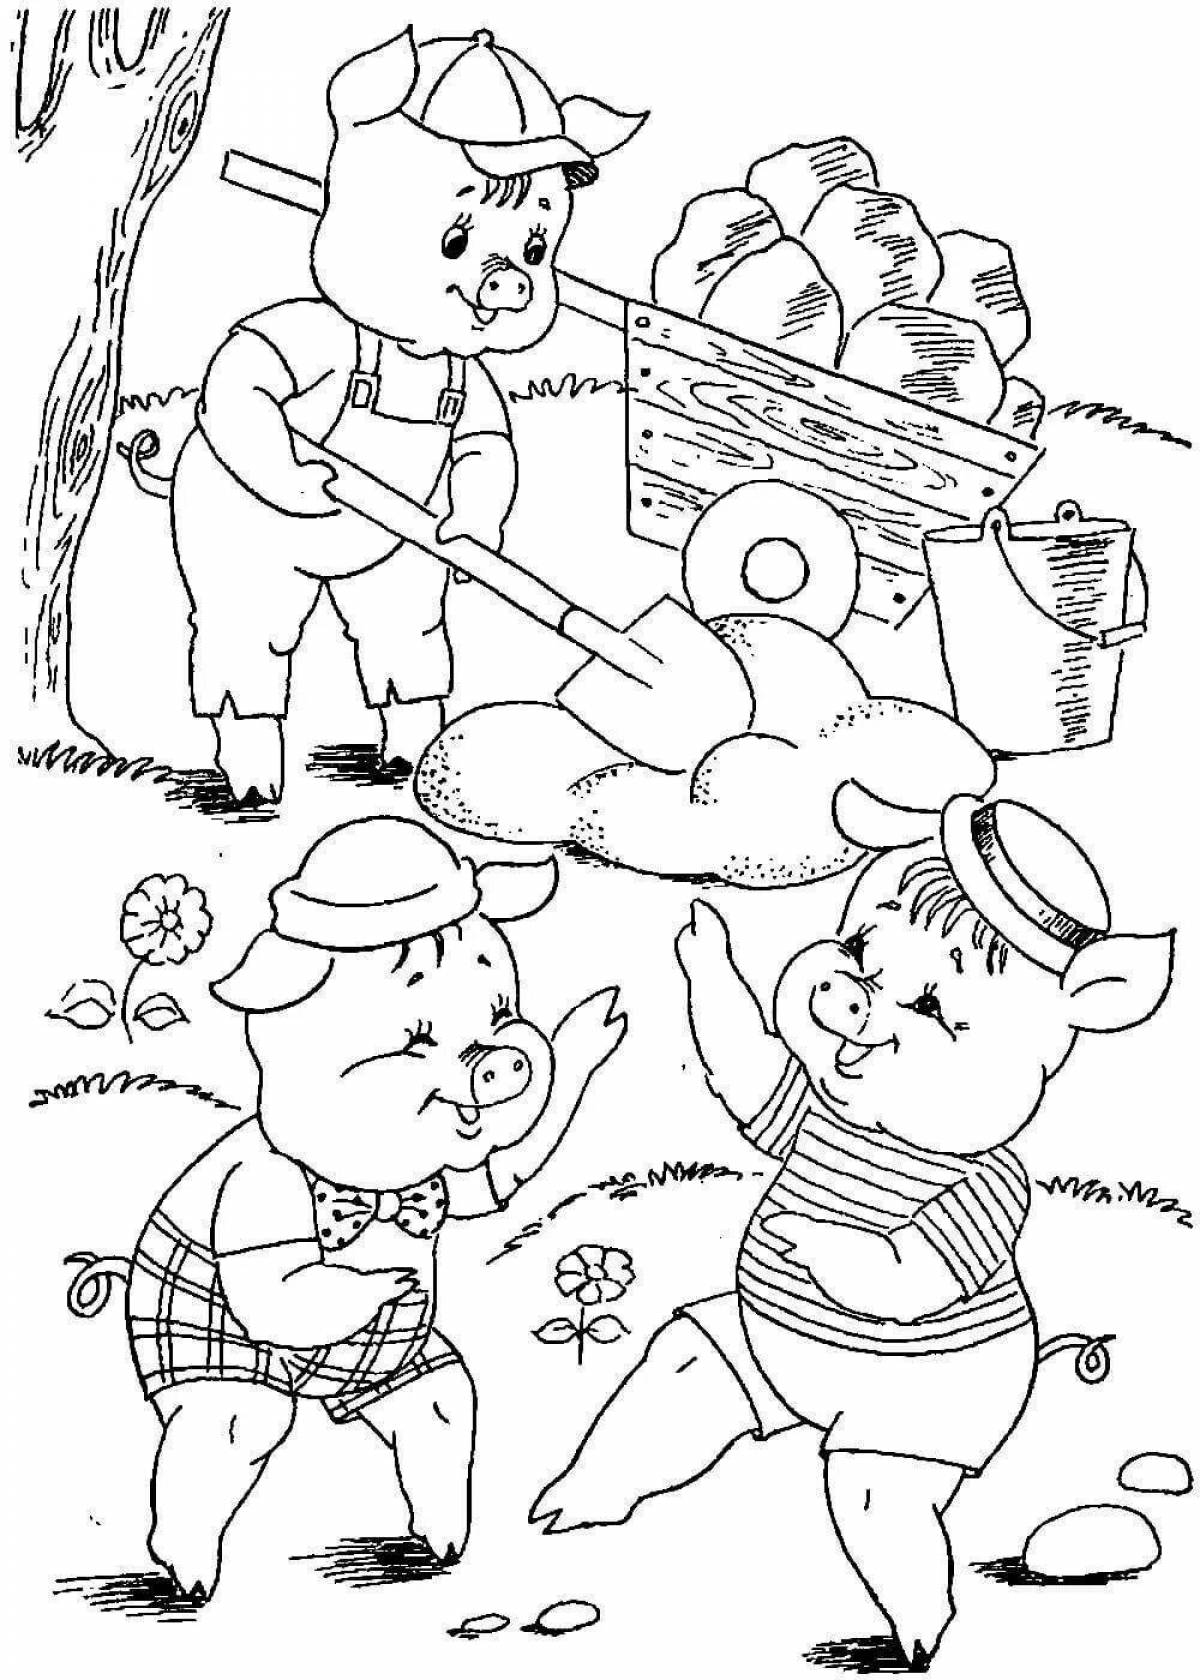 Joyful three little pigs coloring for kids